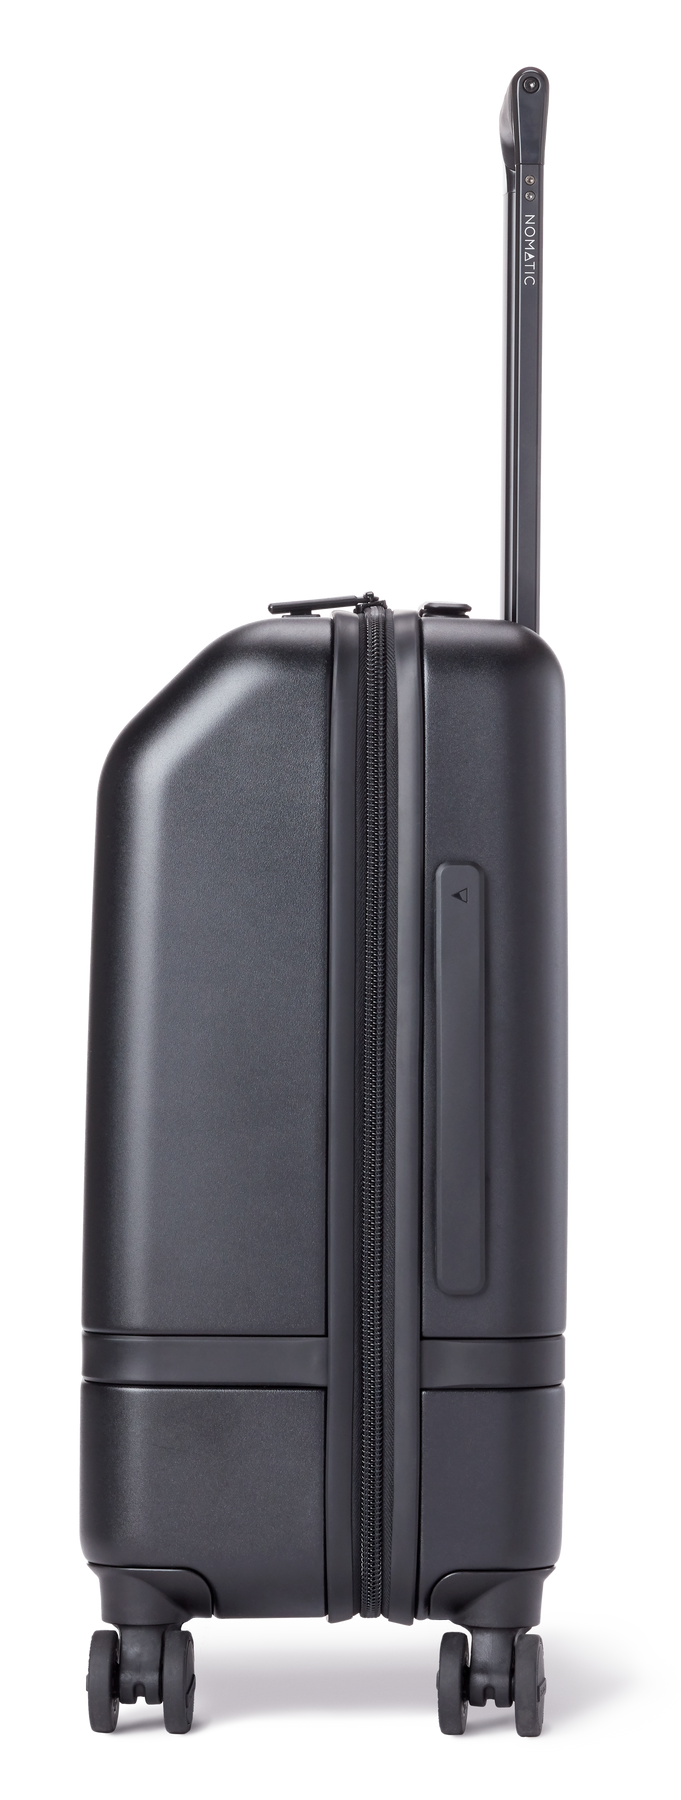 NIKE ACG PACKABLE DUFFEL BAG TSA Compliant Gym Bag/Travel Bag